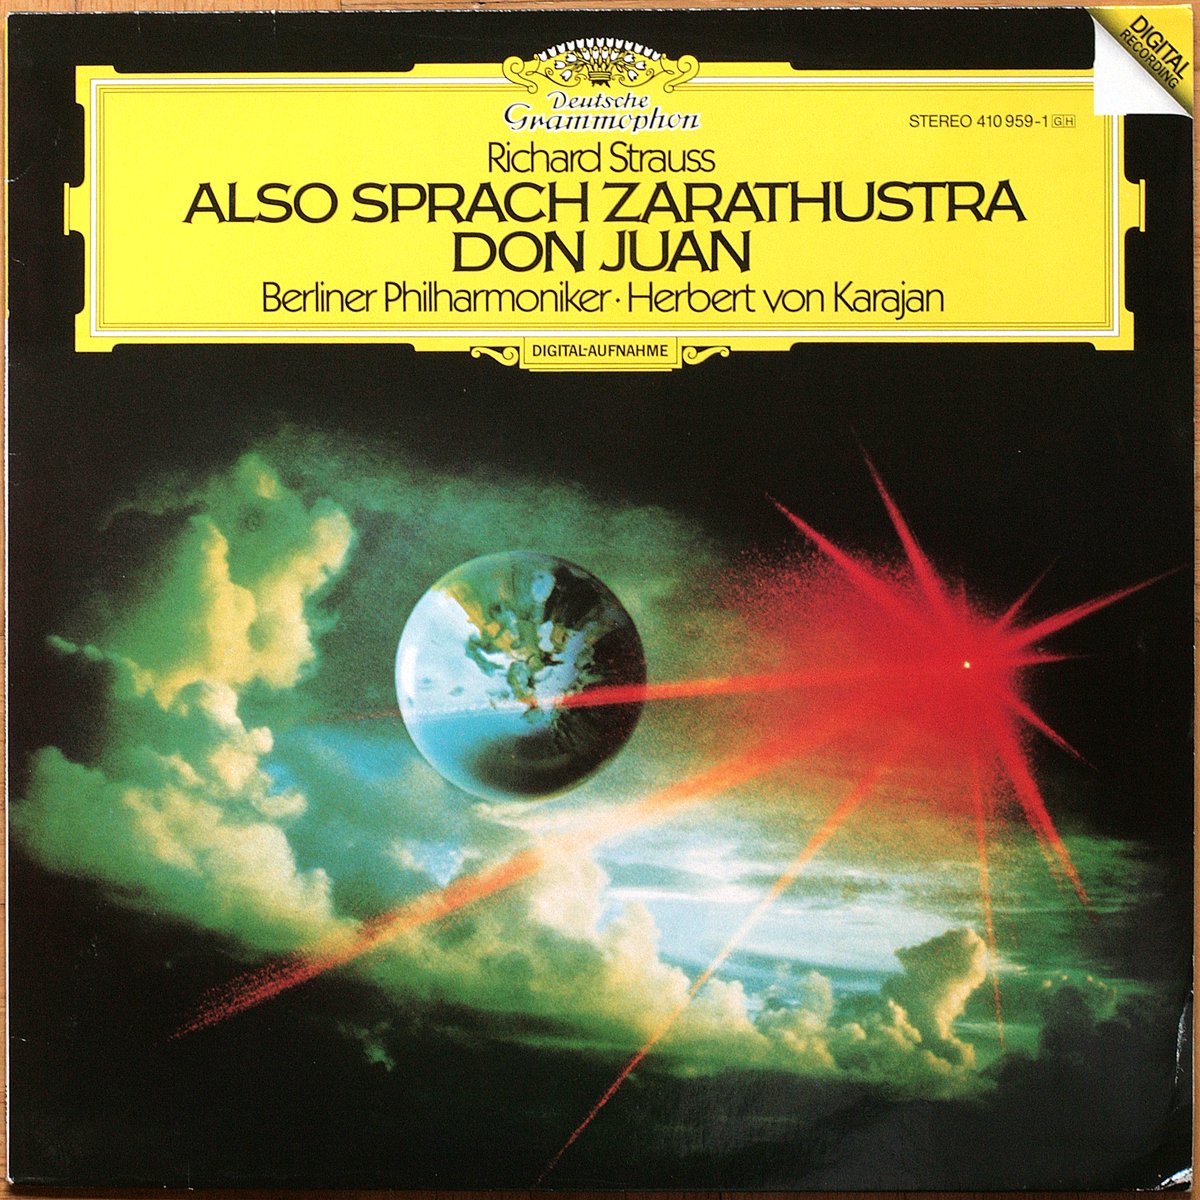 DGG 410 959 Strauss Also Sprach Zarathustra Don Juan Karajan DGG Digital Aufnahme